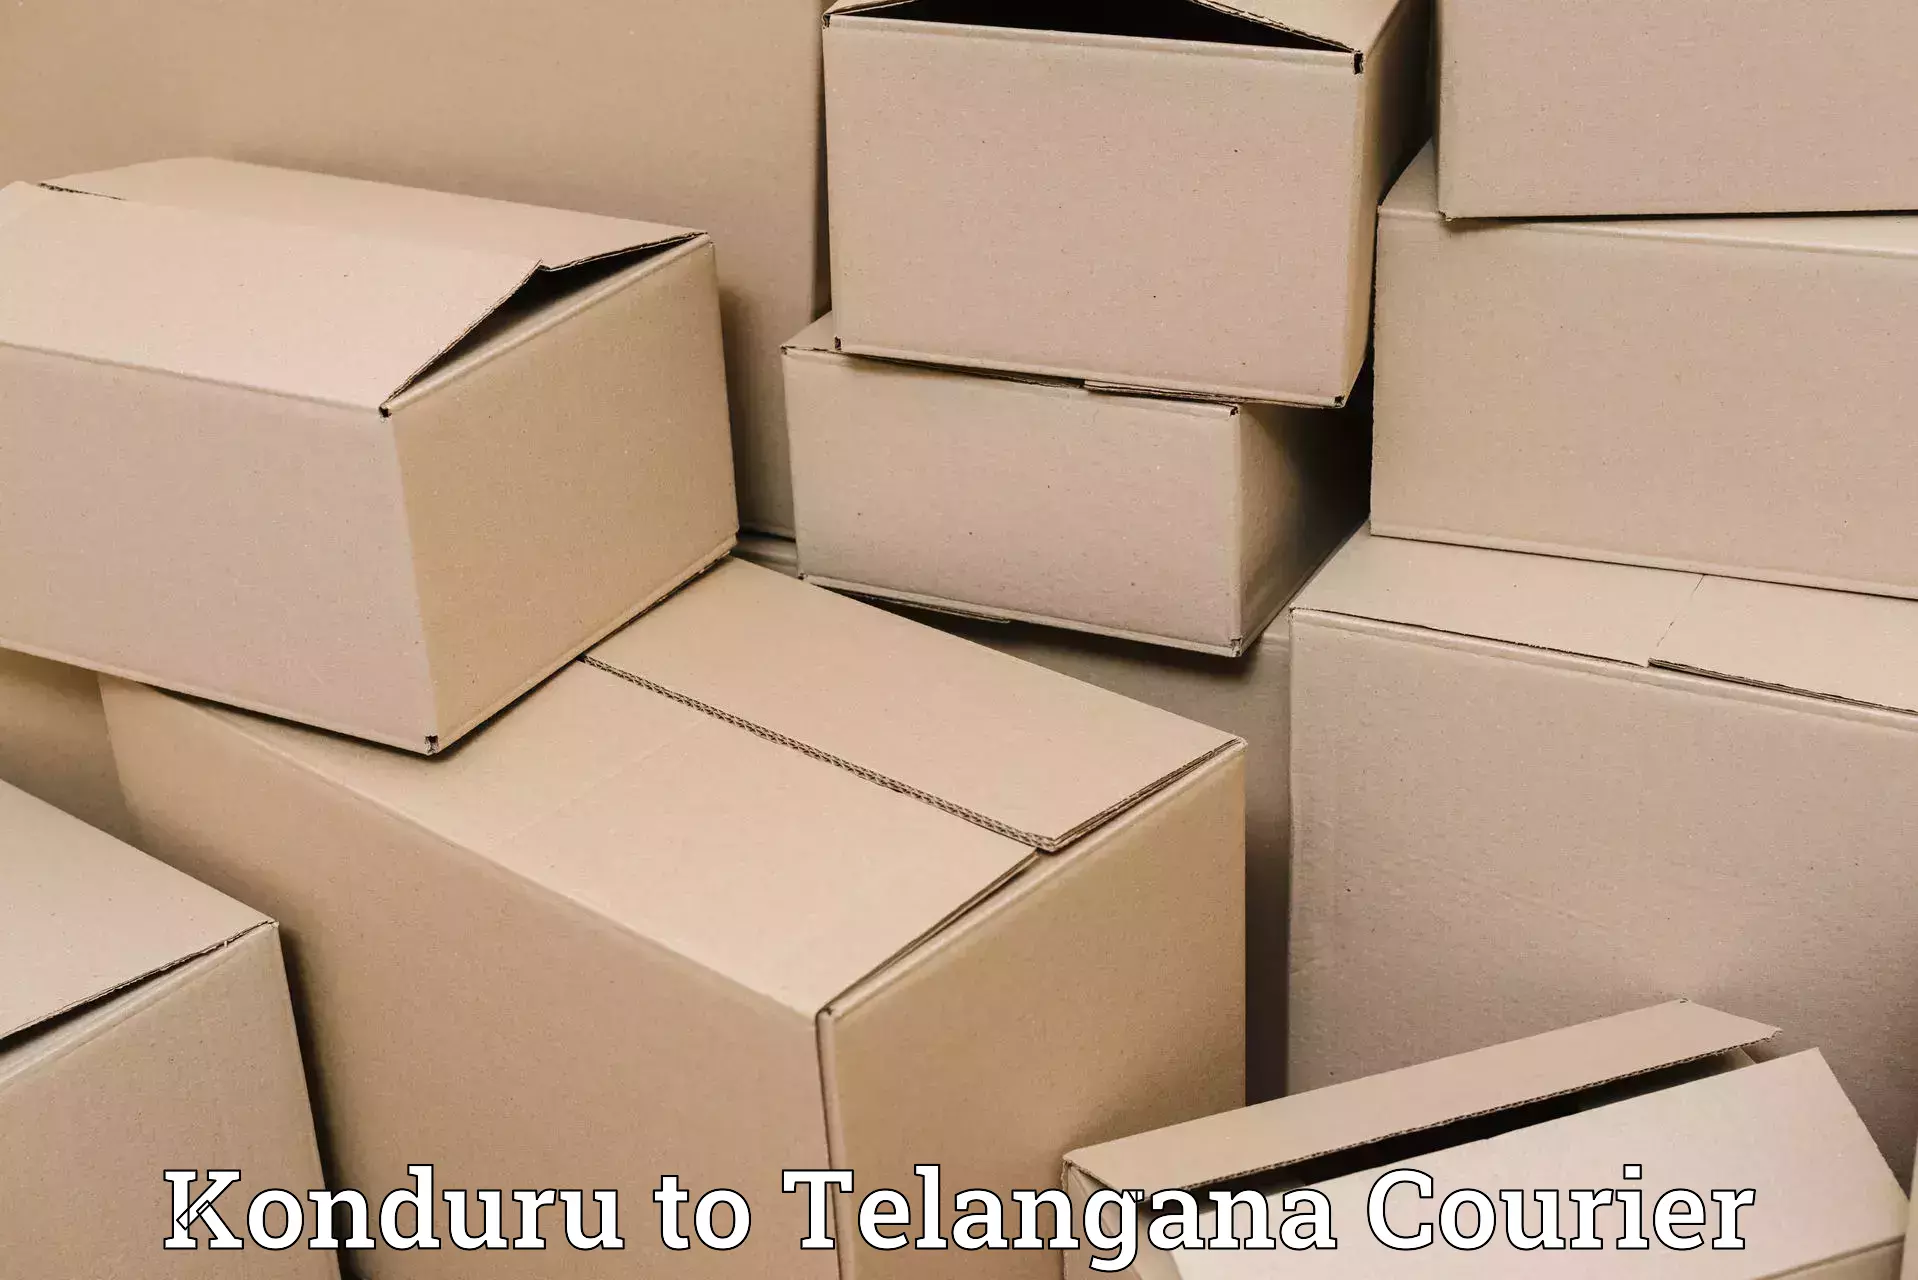 Courier service comparison Konduru to Dharmapuri Jagtial